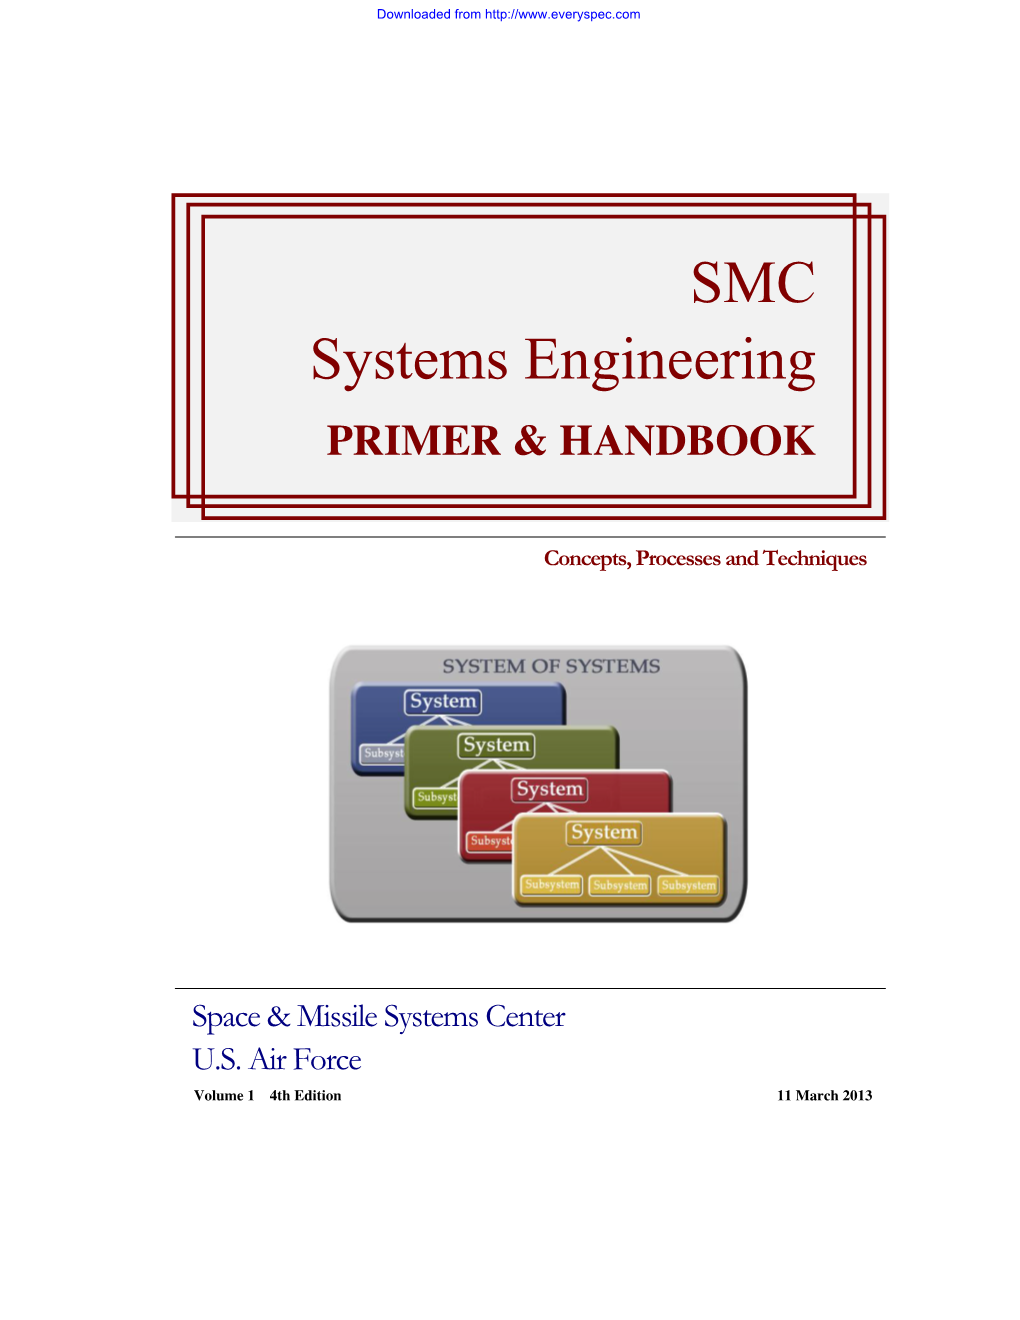 SMC Systems Engineering PRIMER & HANDBOOK